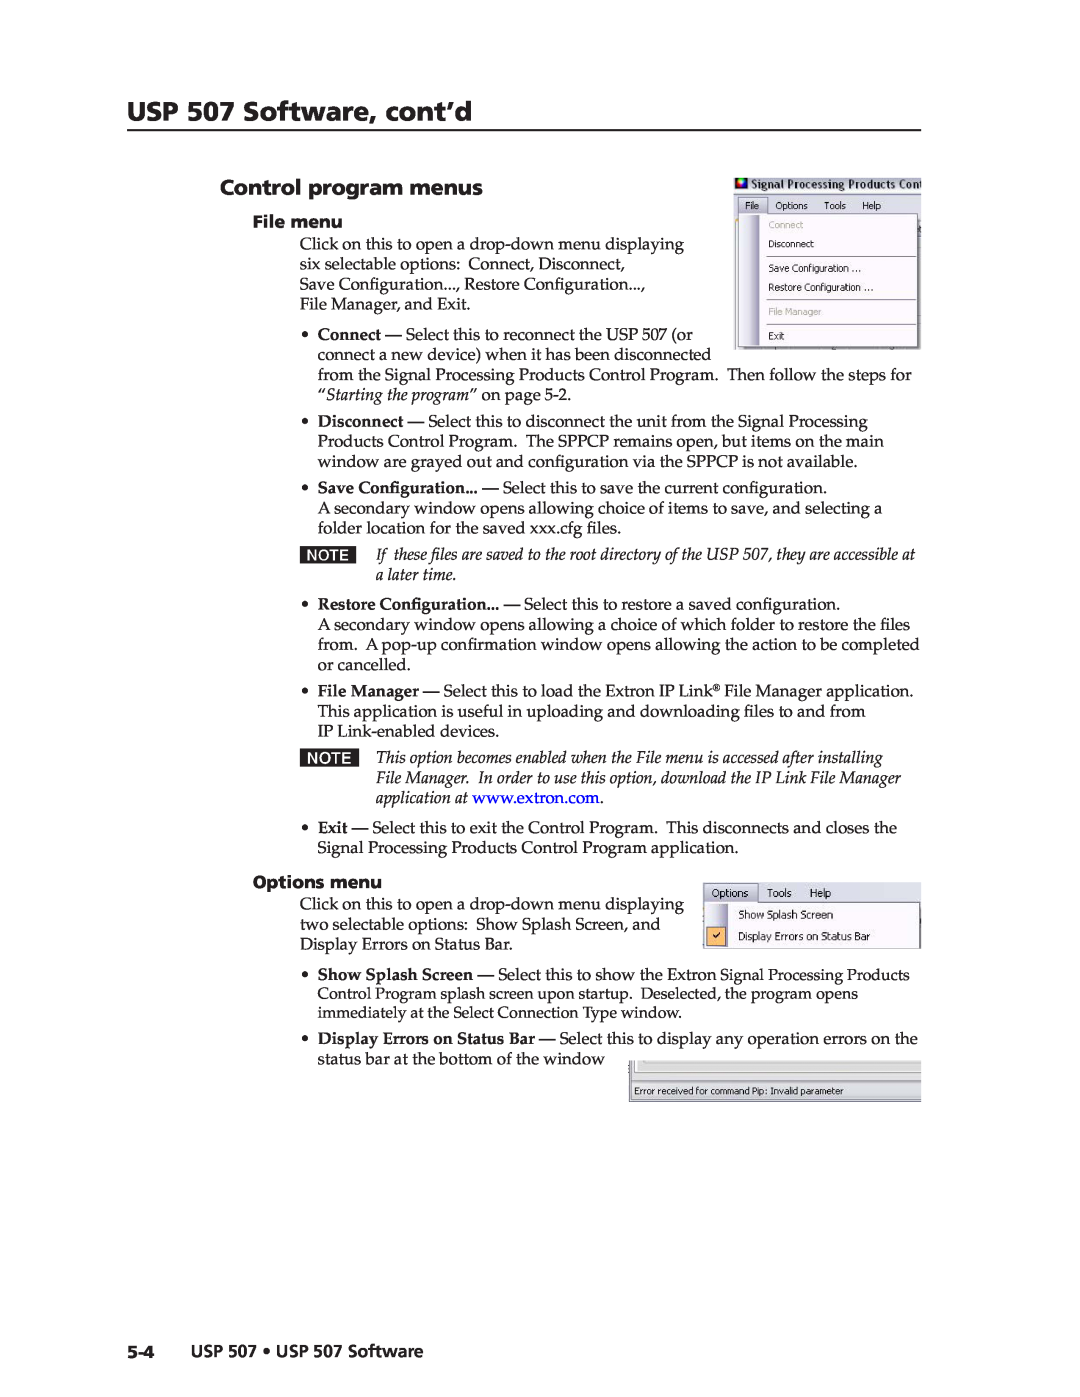 Extron electronic manual USP 507 Software, cont’d, Control program menus, File menu, Options menu 